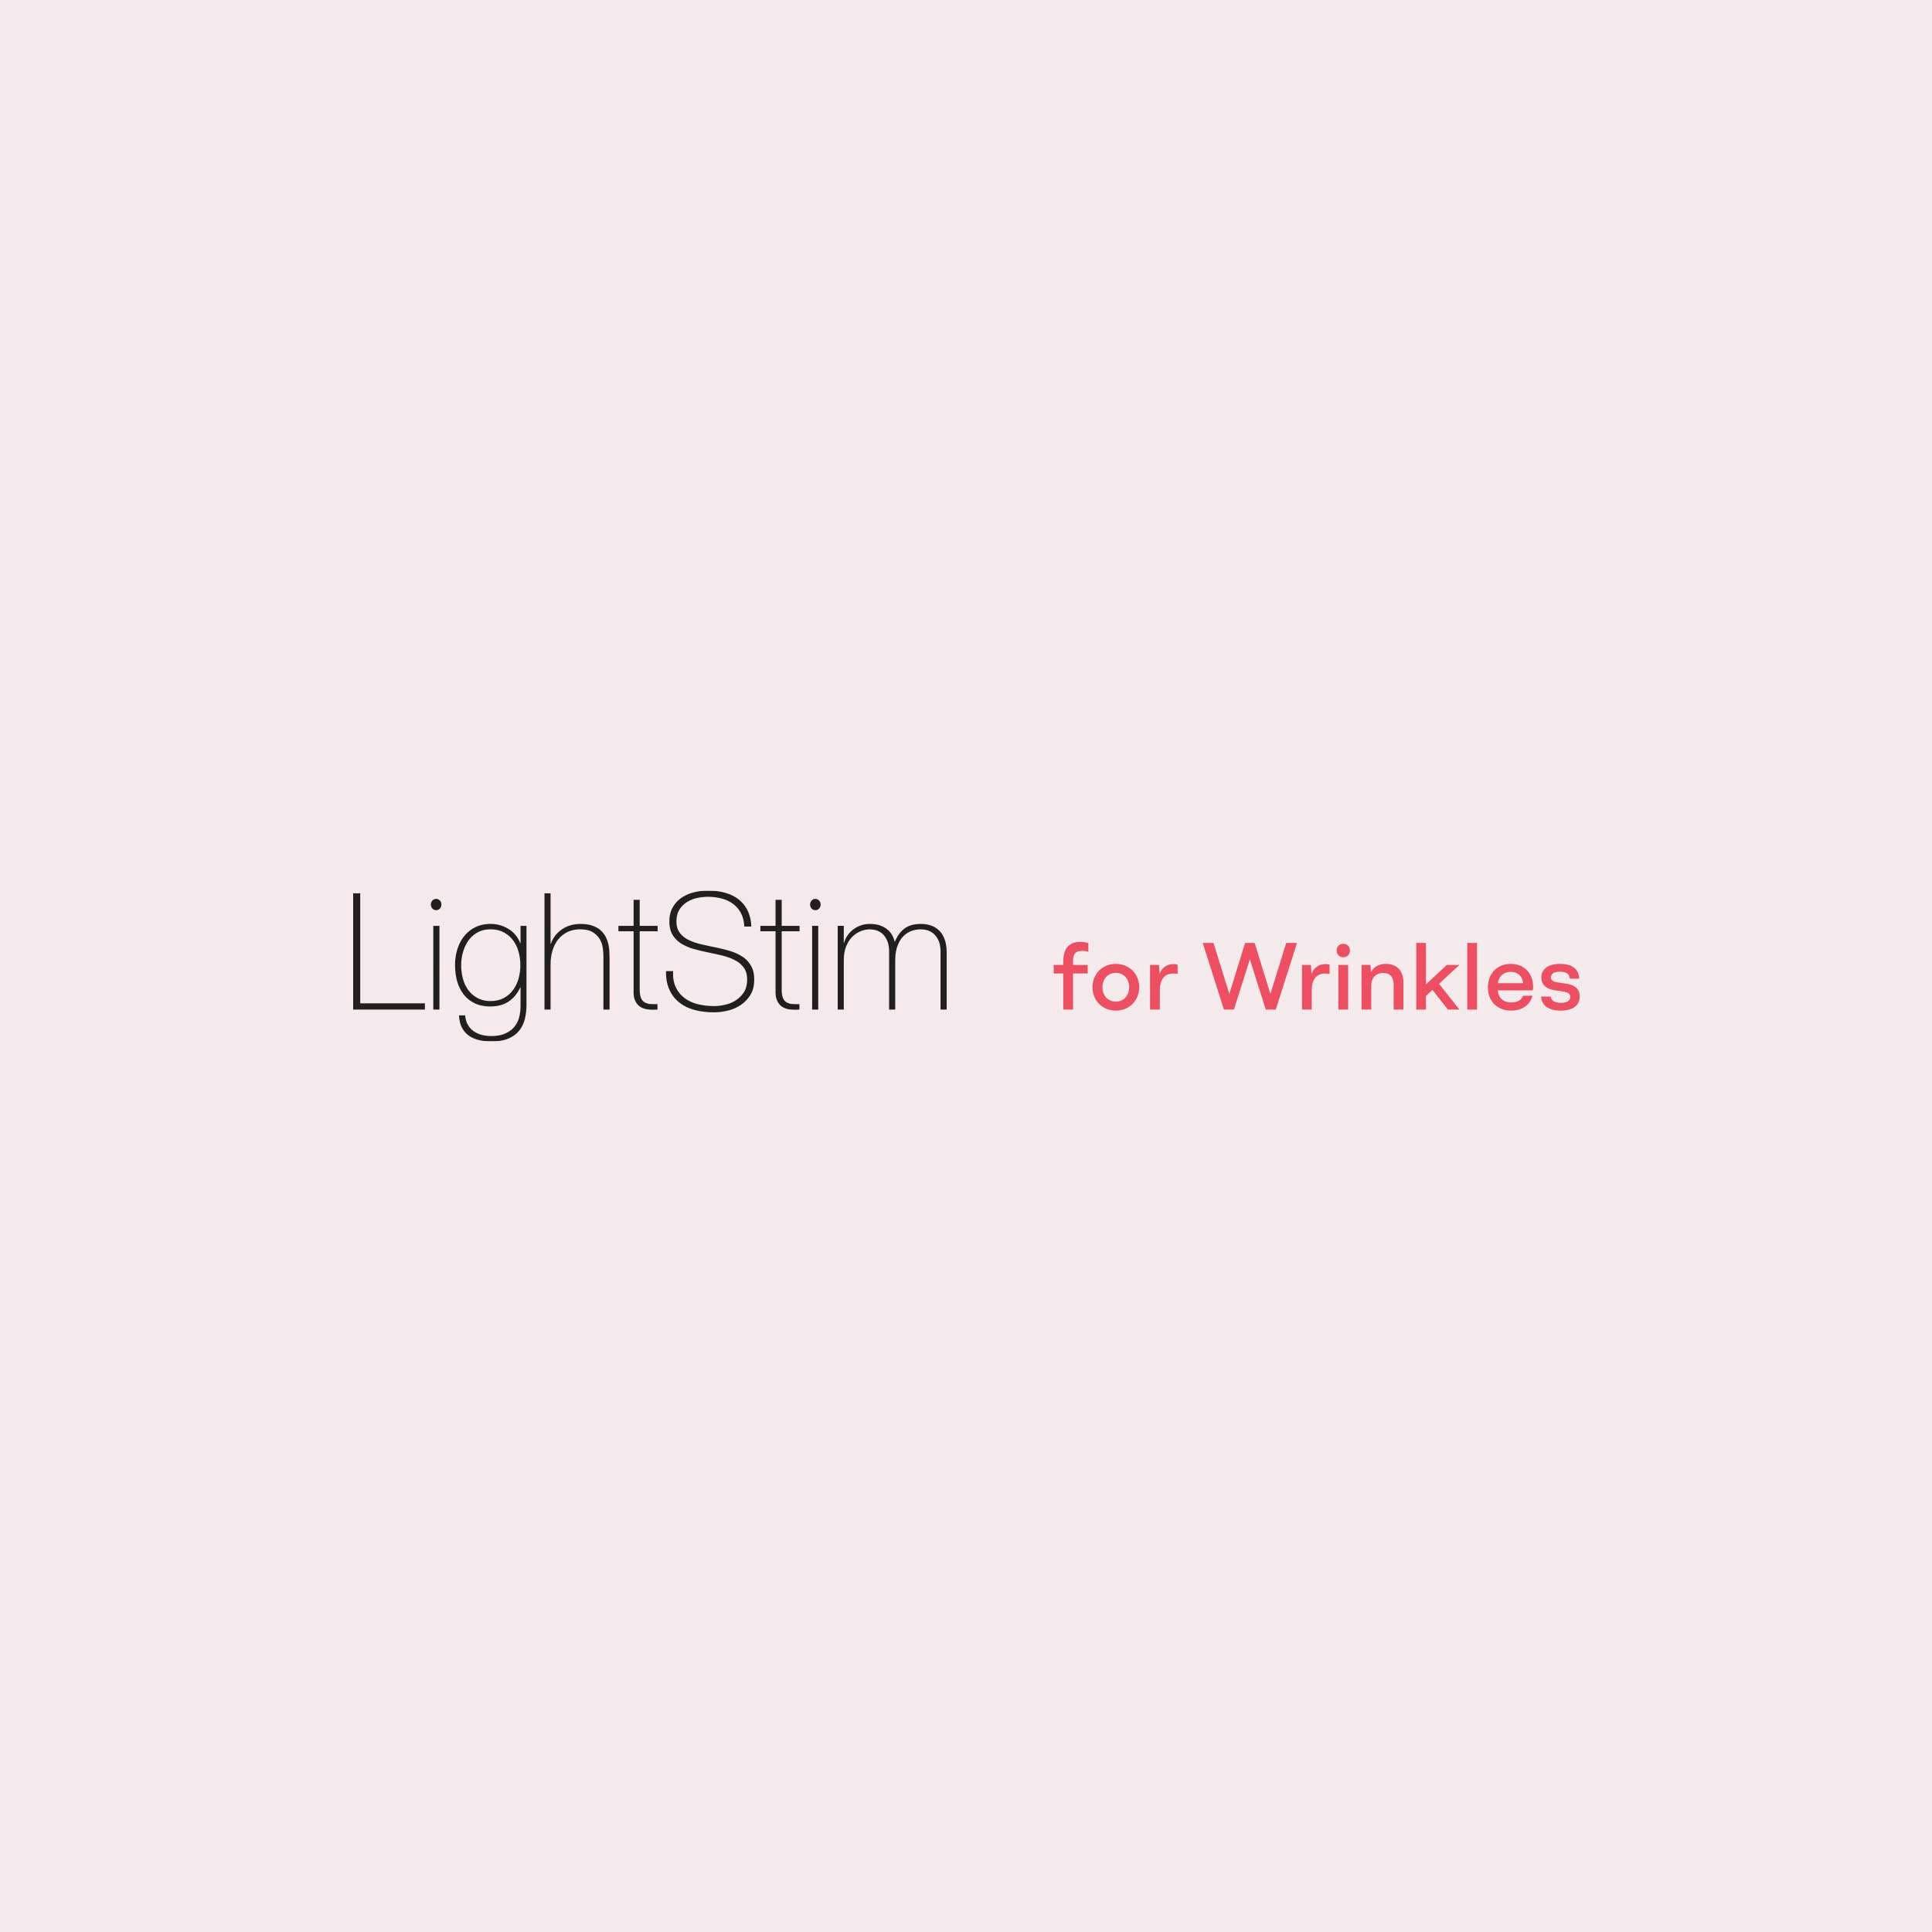 LightStim - Brand Identity, Packaging Design, Website Design, Social Media Design, and Art Direction